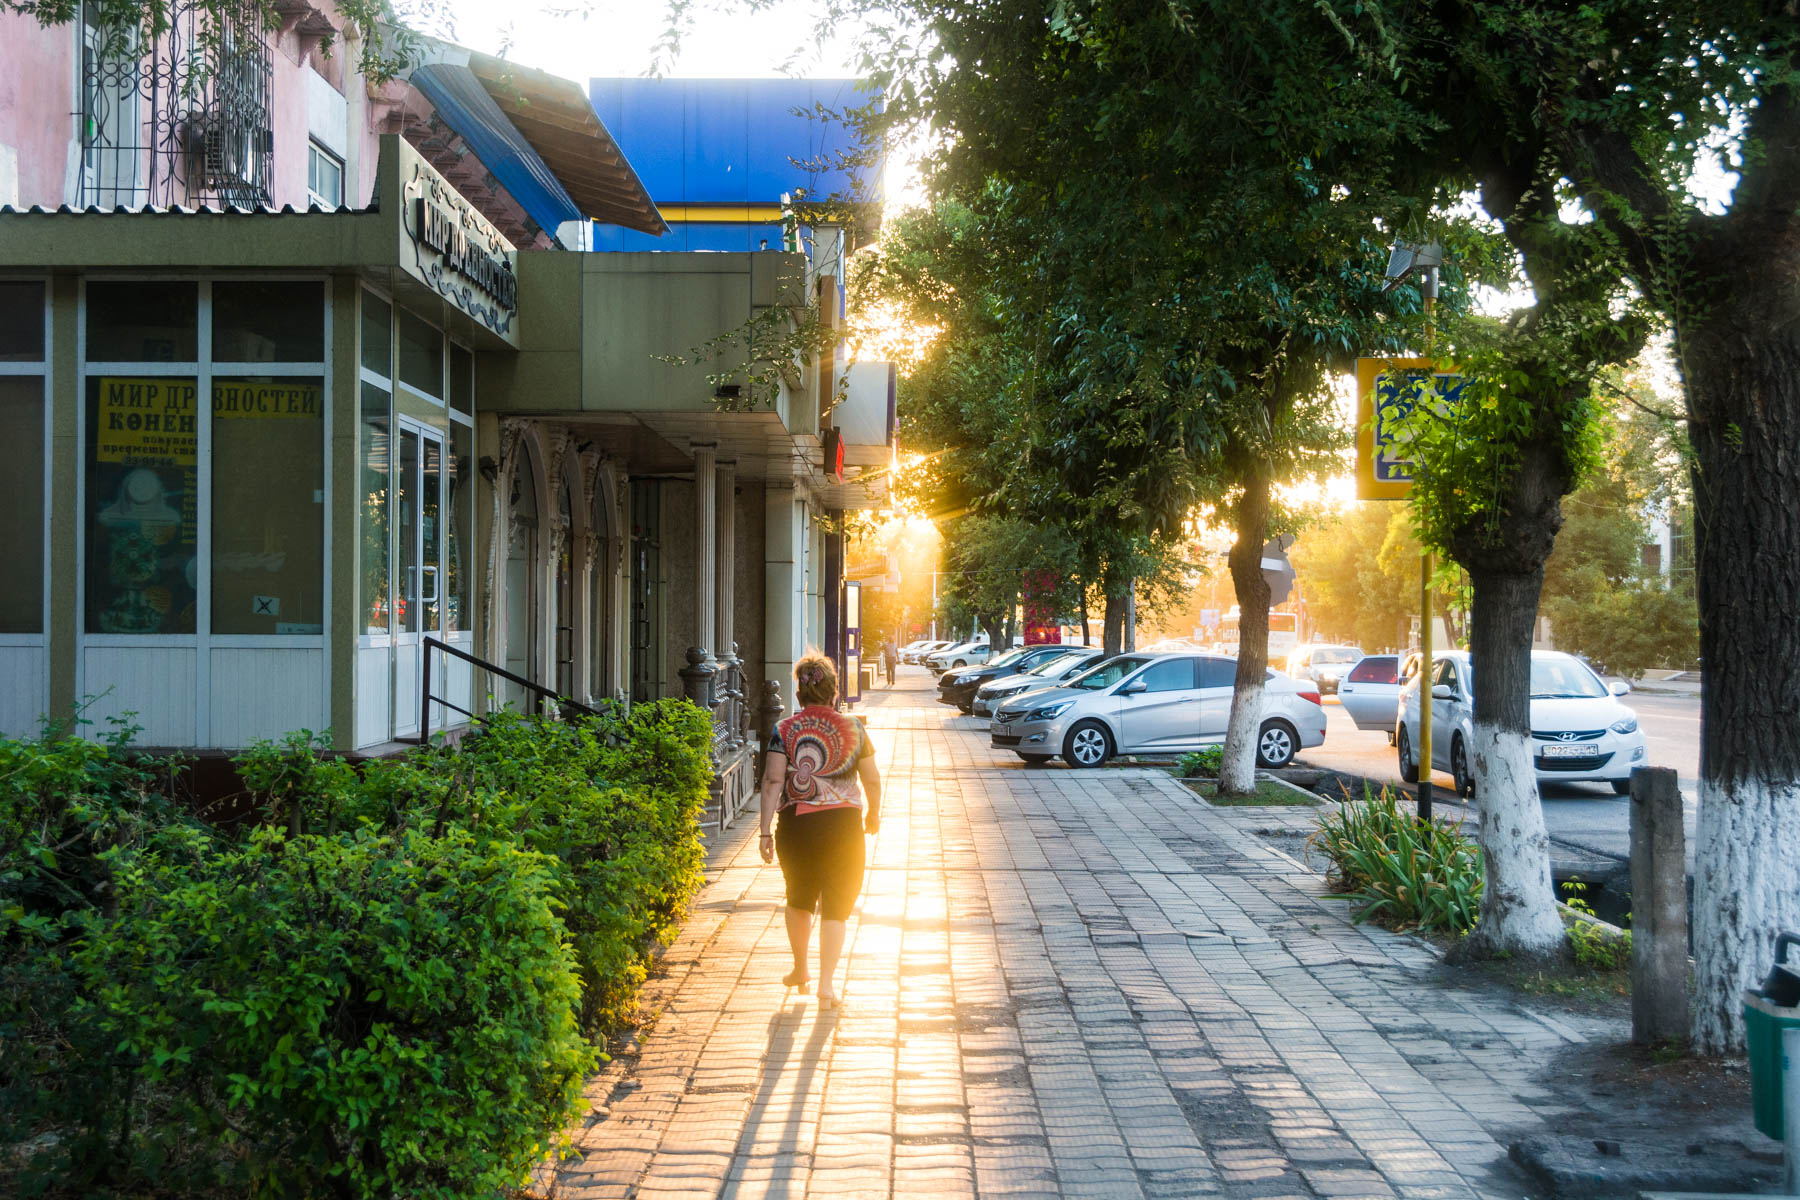 Shymkent, Kazakhstan at sunset - Lost With Purpose